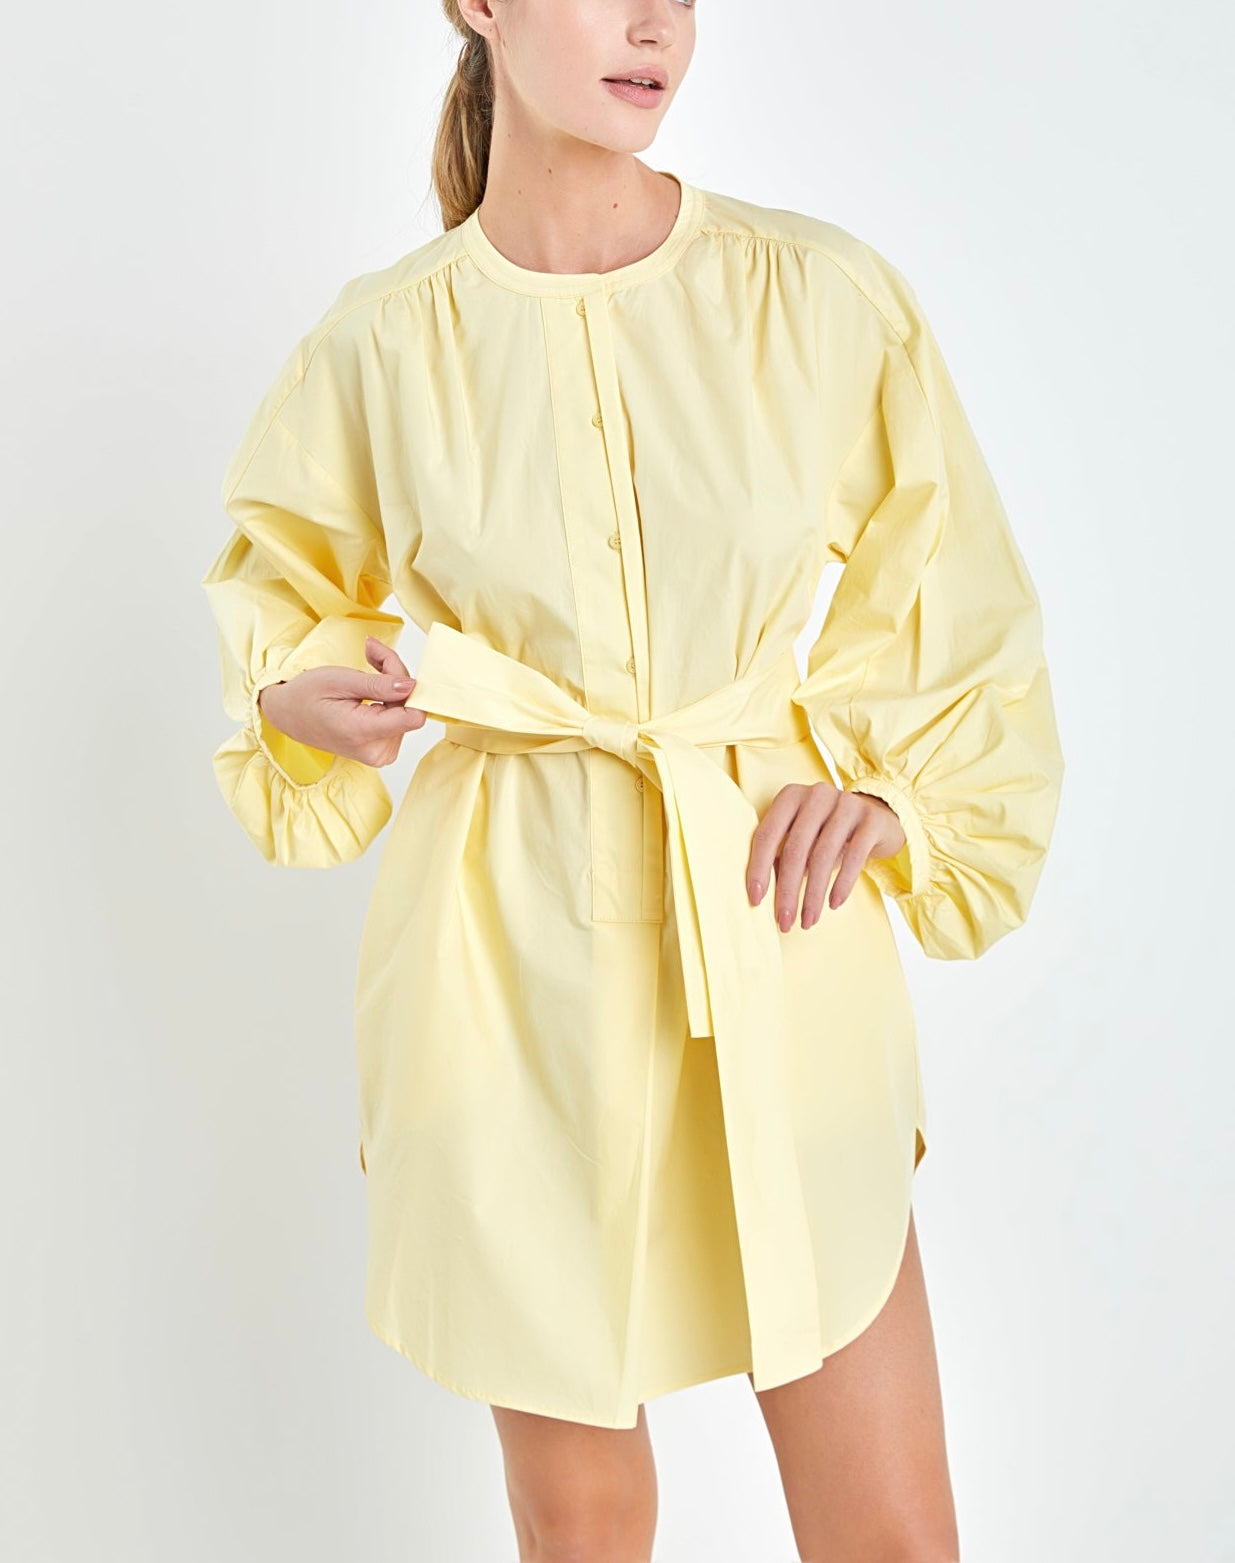 Ava Billow Mini Butter Dress, yellow button up dress by english factory 